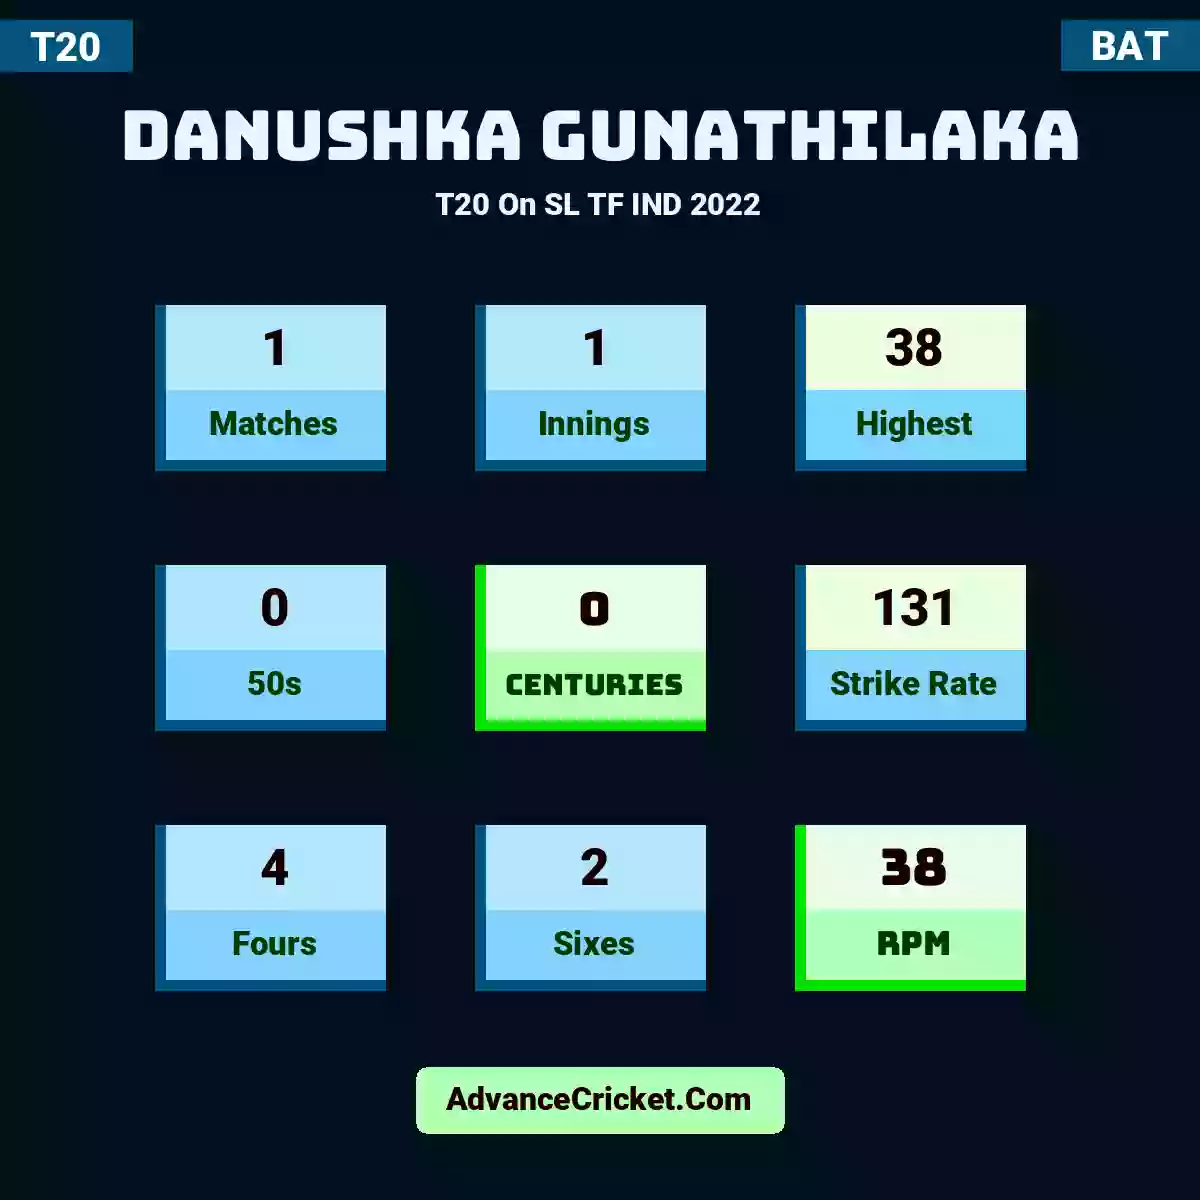 Danushka Gunathilaka T20  On SL TF IND 2022, Danushka Gunathilaka played 1 matches, scored 38 runs as highest, 0 half-centuries, and 0 centuries, with a strike rate of 131. D.Gunathilaka hit 4 fours and 2 sixes, with an RPM of 38.